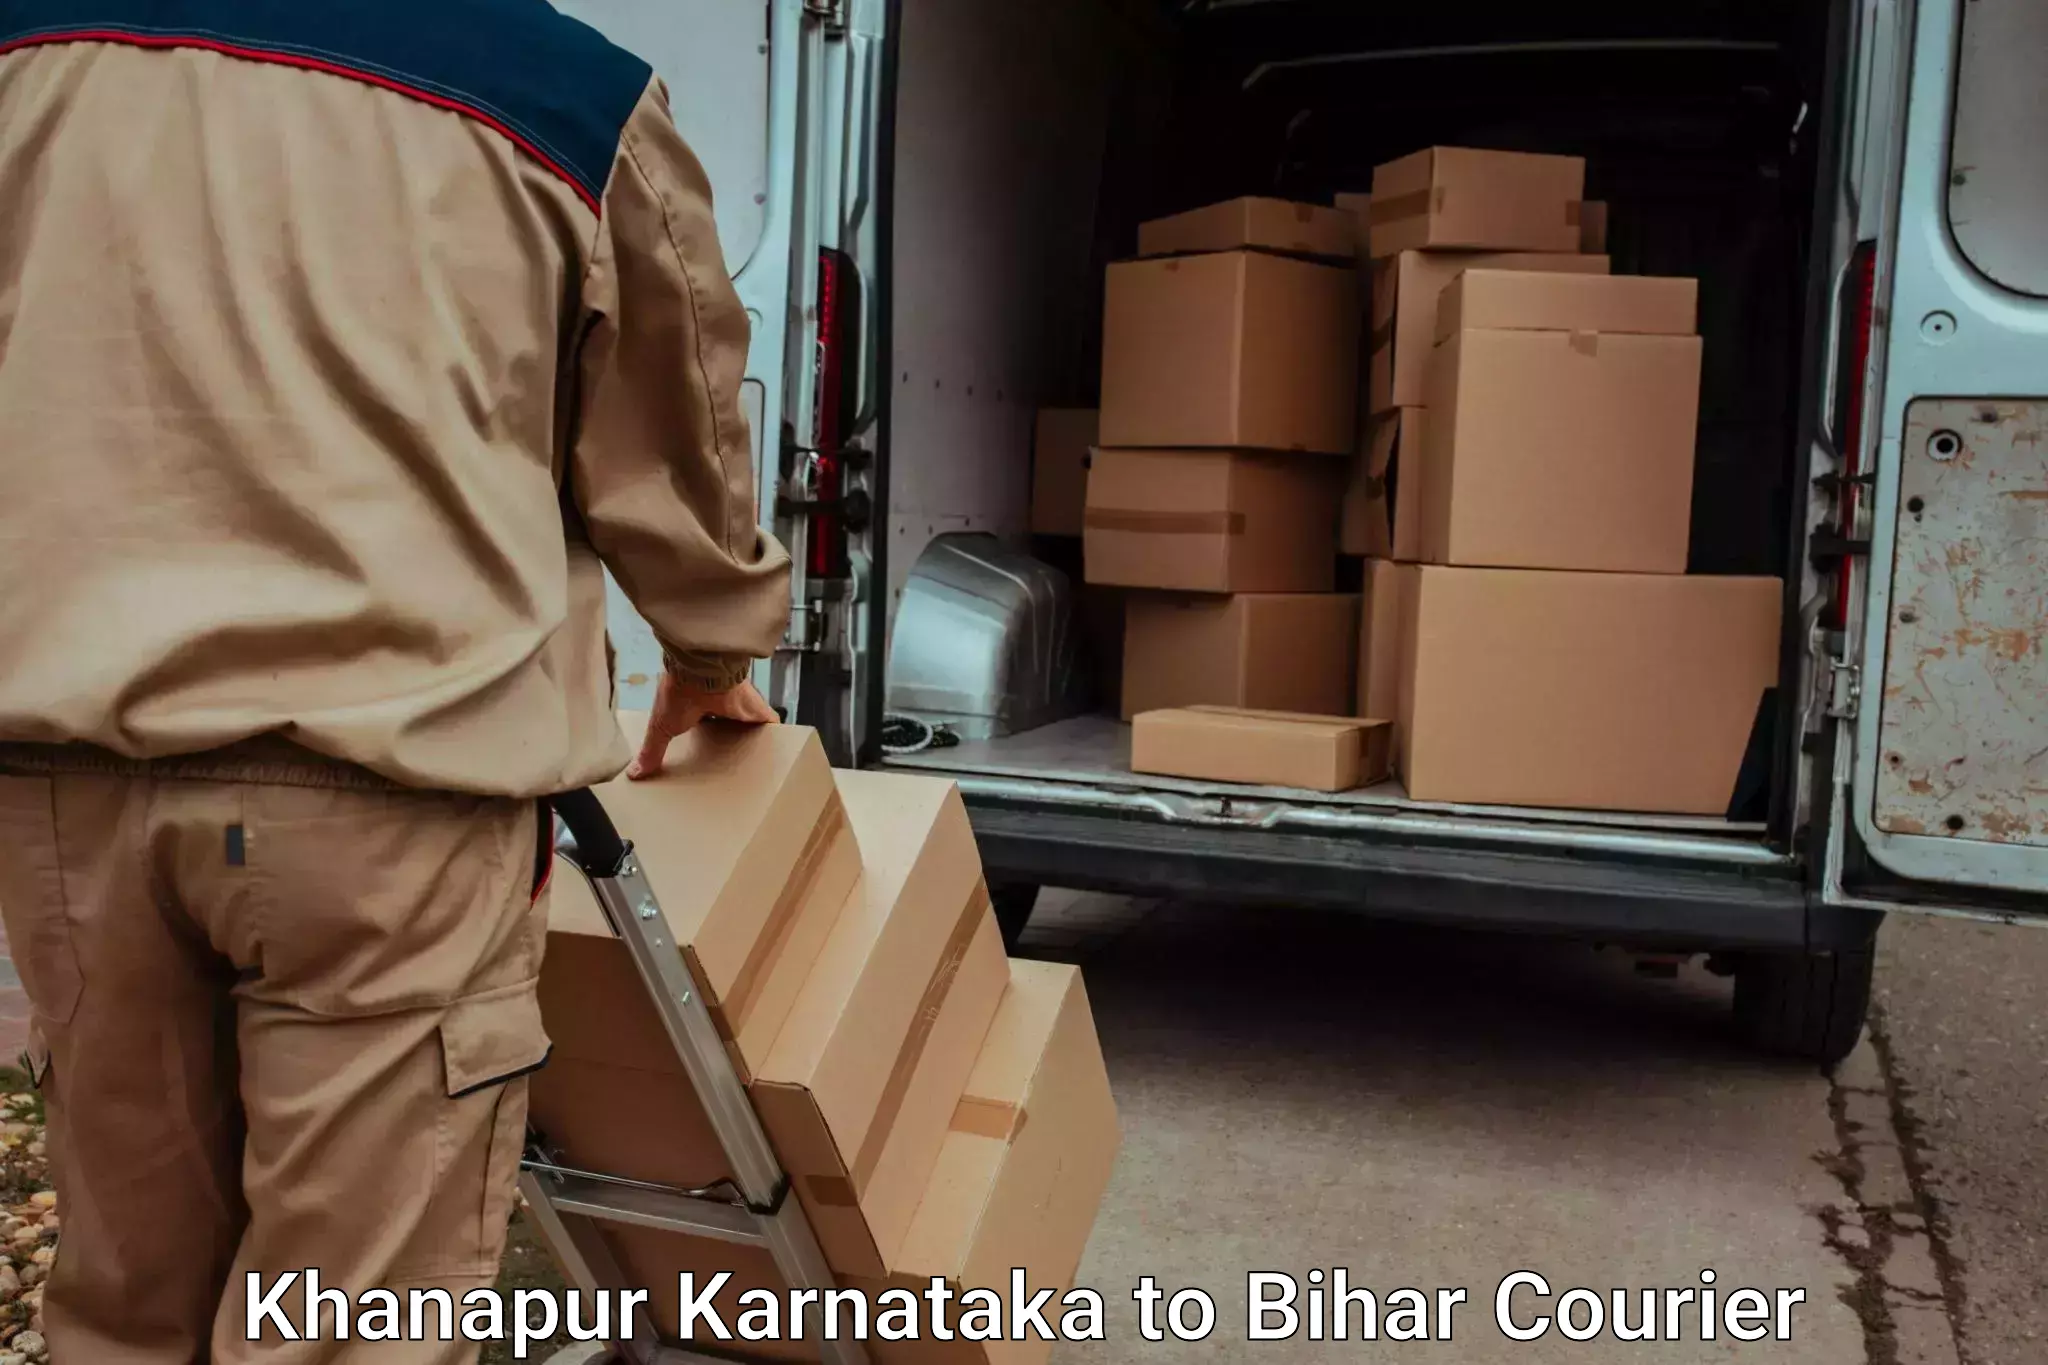 Professional packing services Khanapur Karnataka to Vaishali